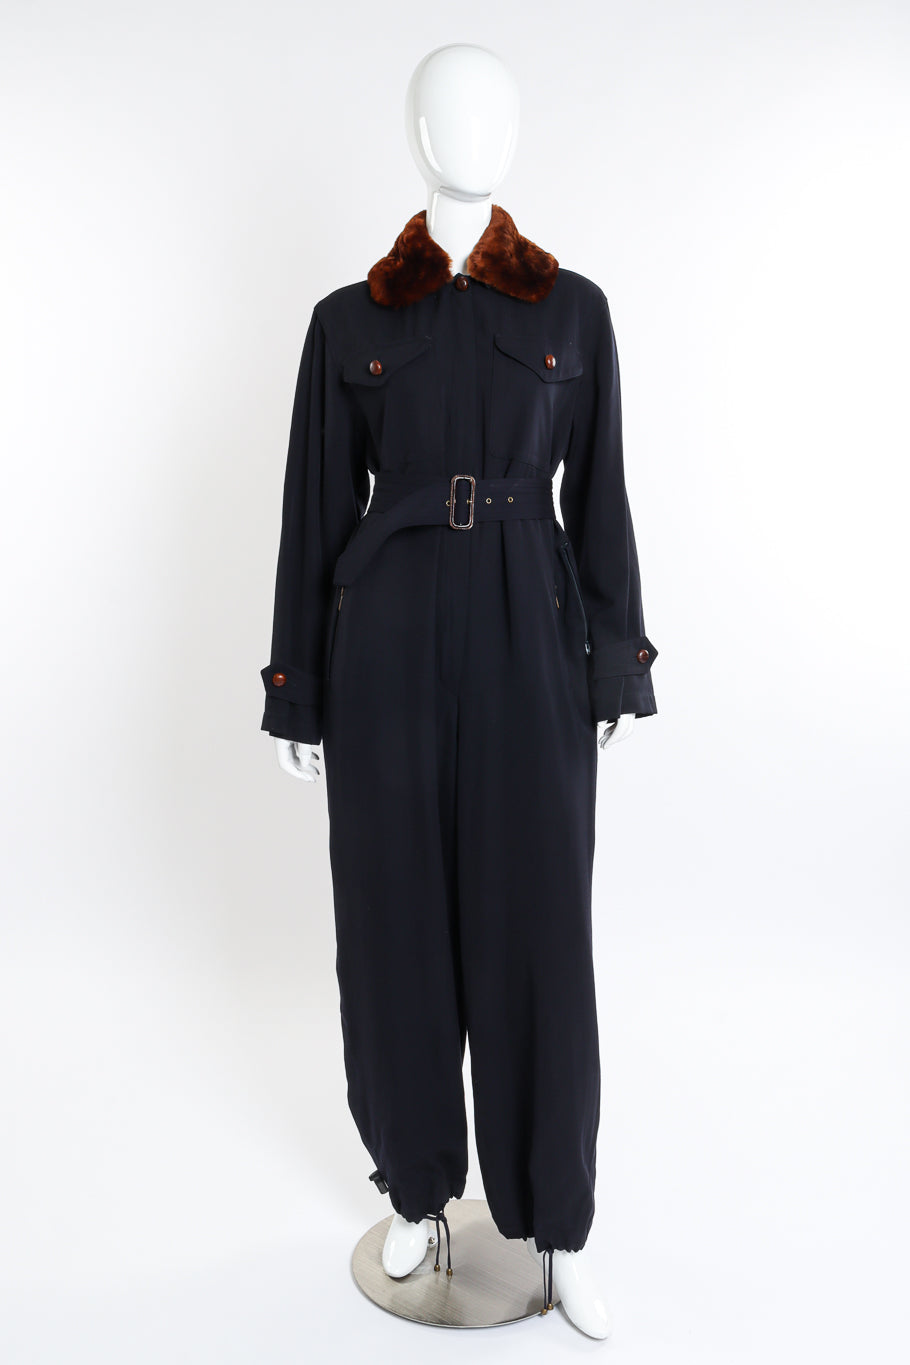 Jean Paul Gaultier Femme Fur Trim Flight Suit front on mannequin @recessla 